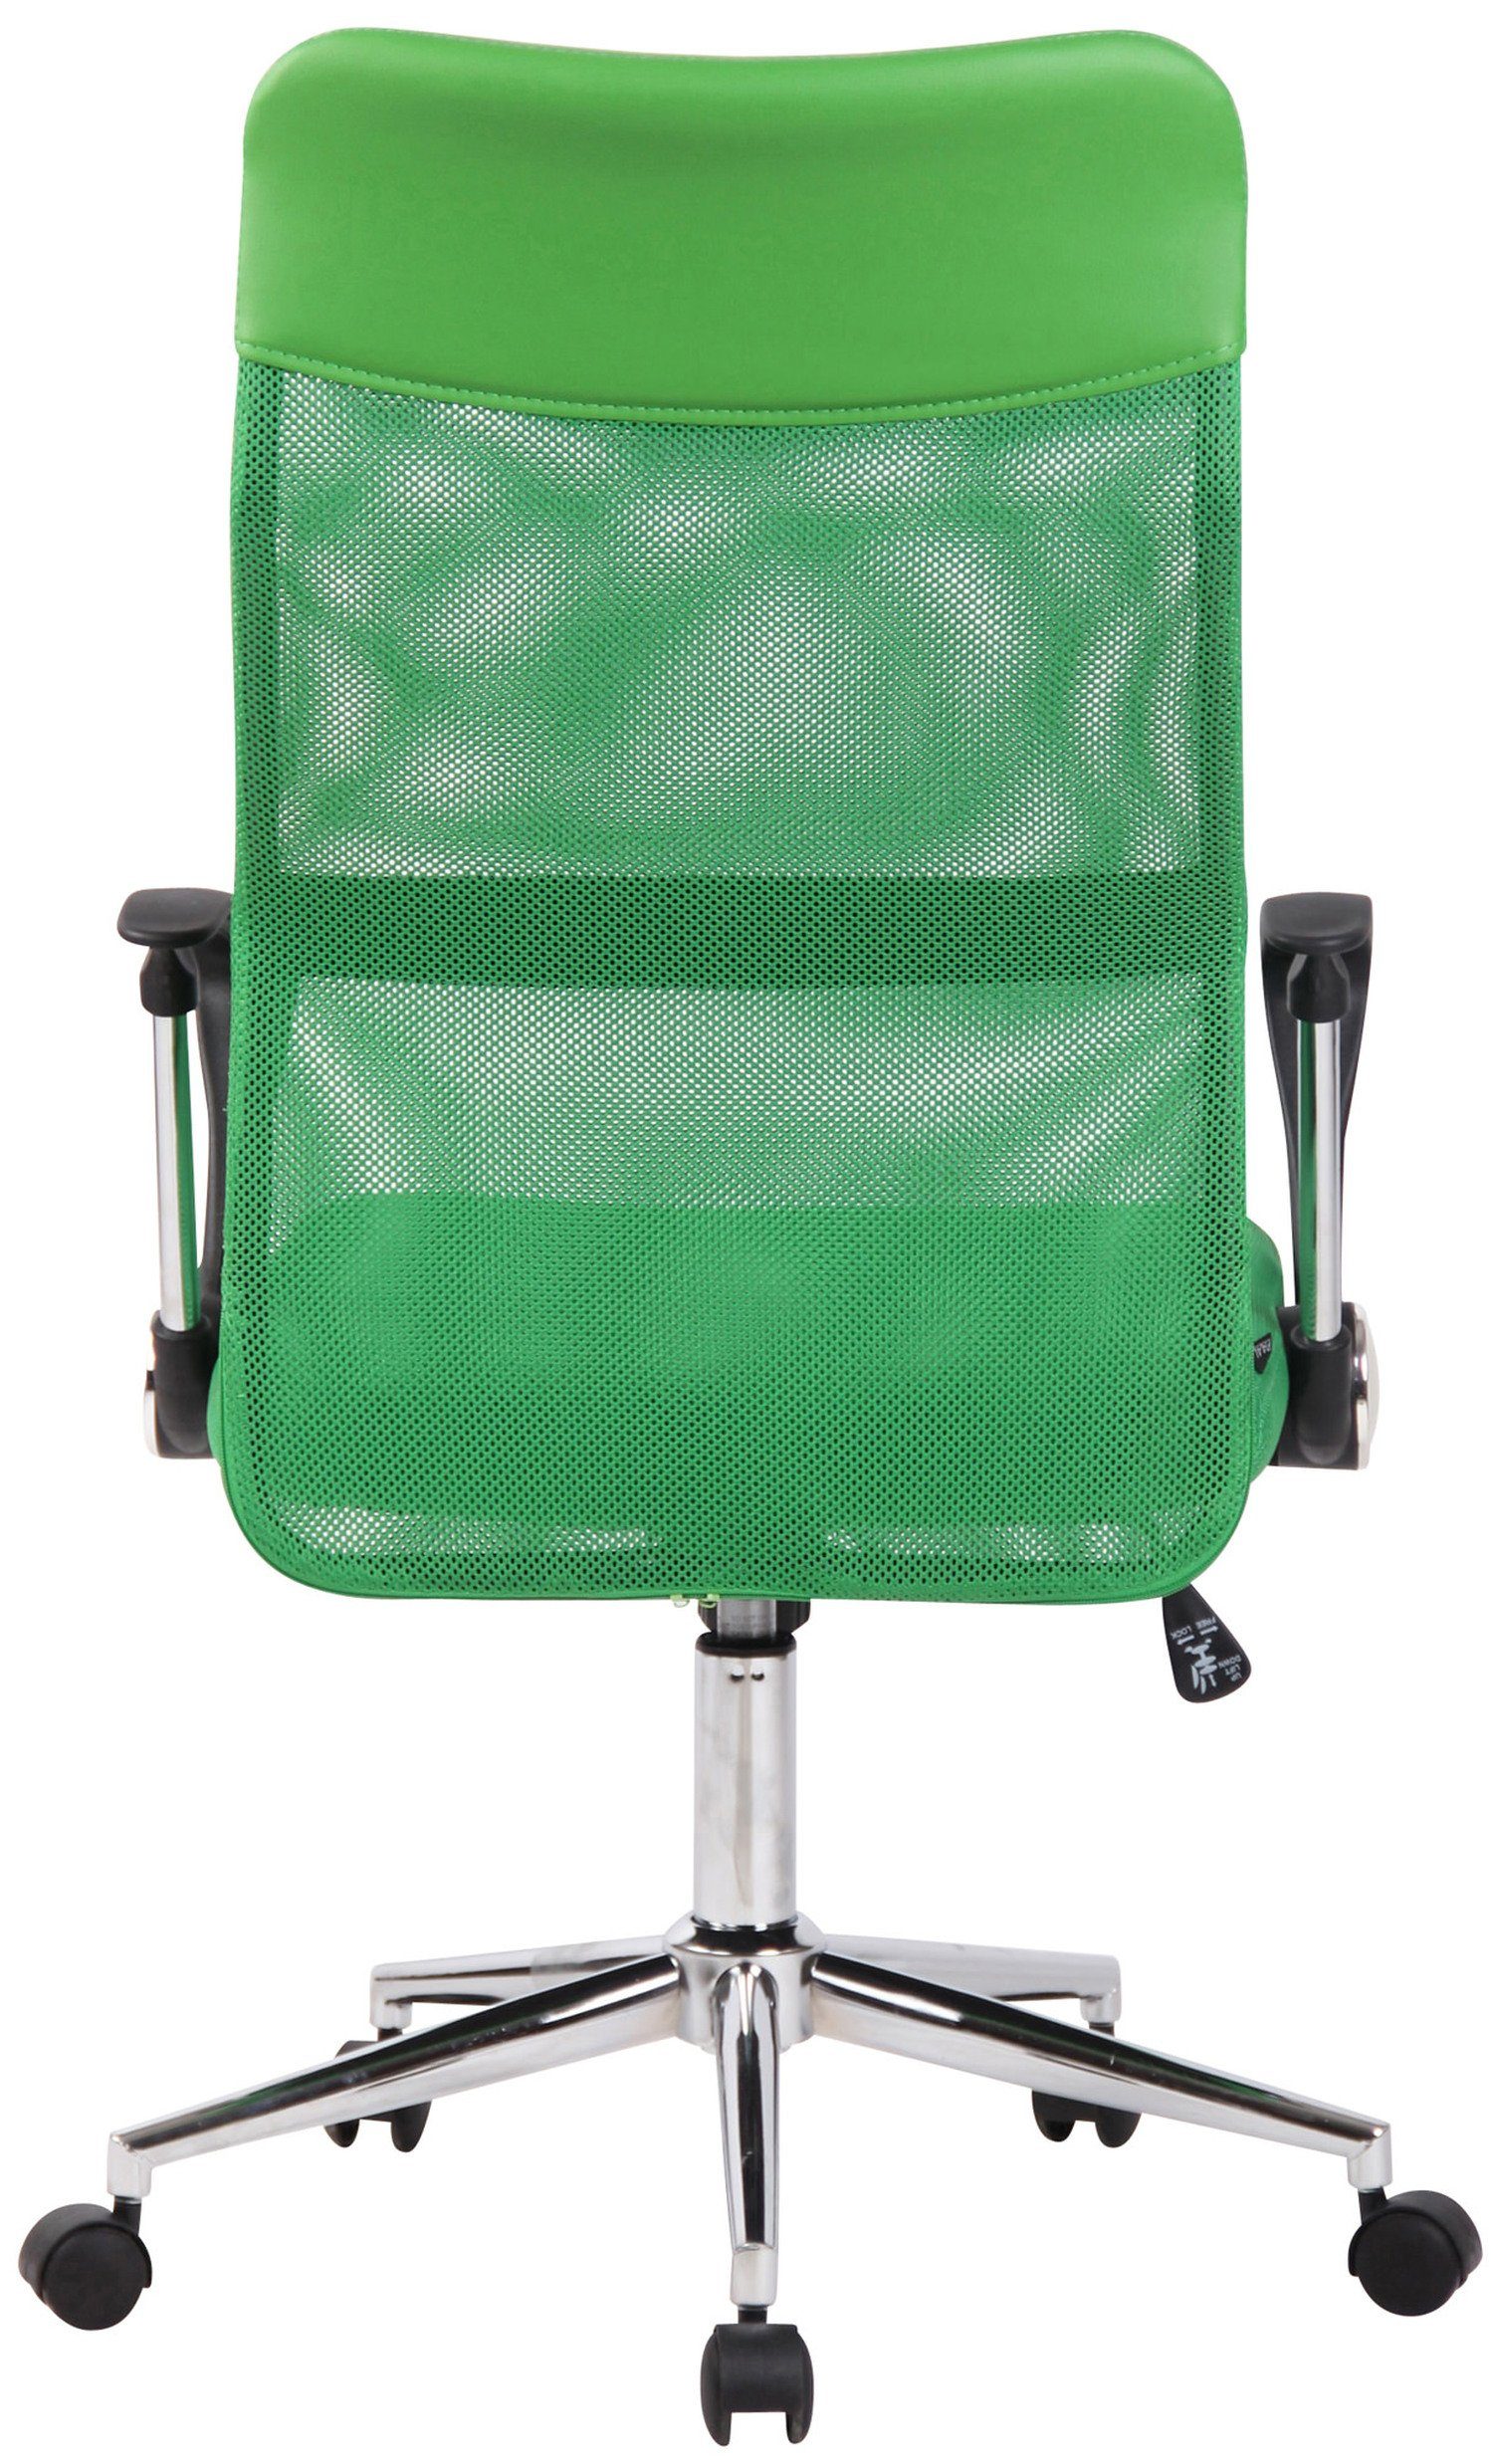 Chefsessel, und 360° Rückenlehne XXL), Metall Bürostuhl mit bequemer Cordoba grün - chrom Netzbezug (Schreibtischstuhl, TPFLiving Sitz: drehbar - höhenverstellbar Gestell: Drehstuhl, Bürostuhl